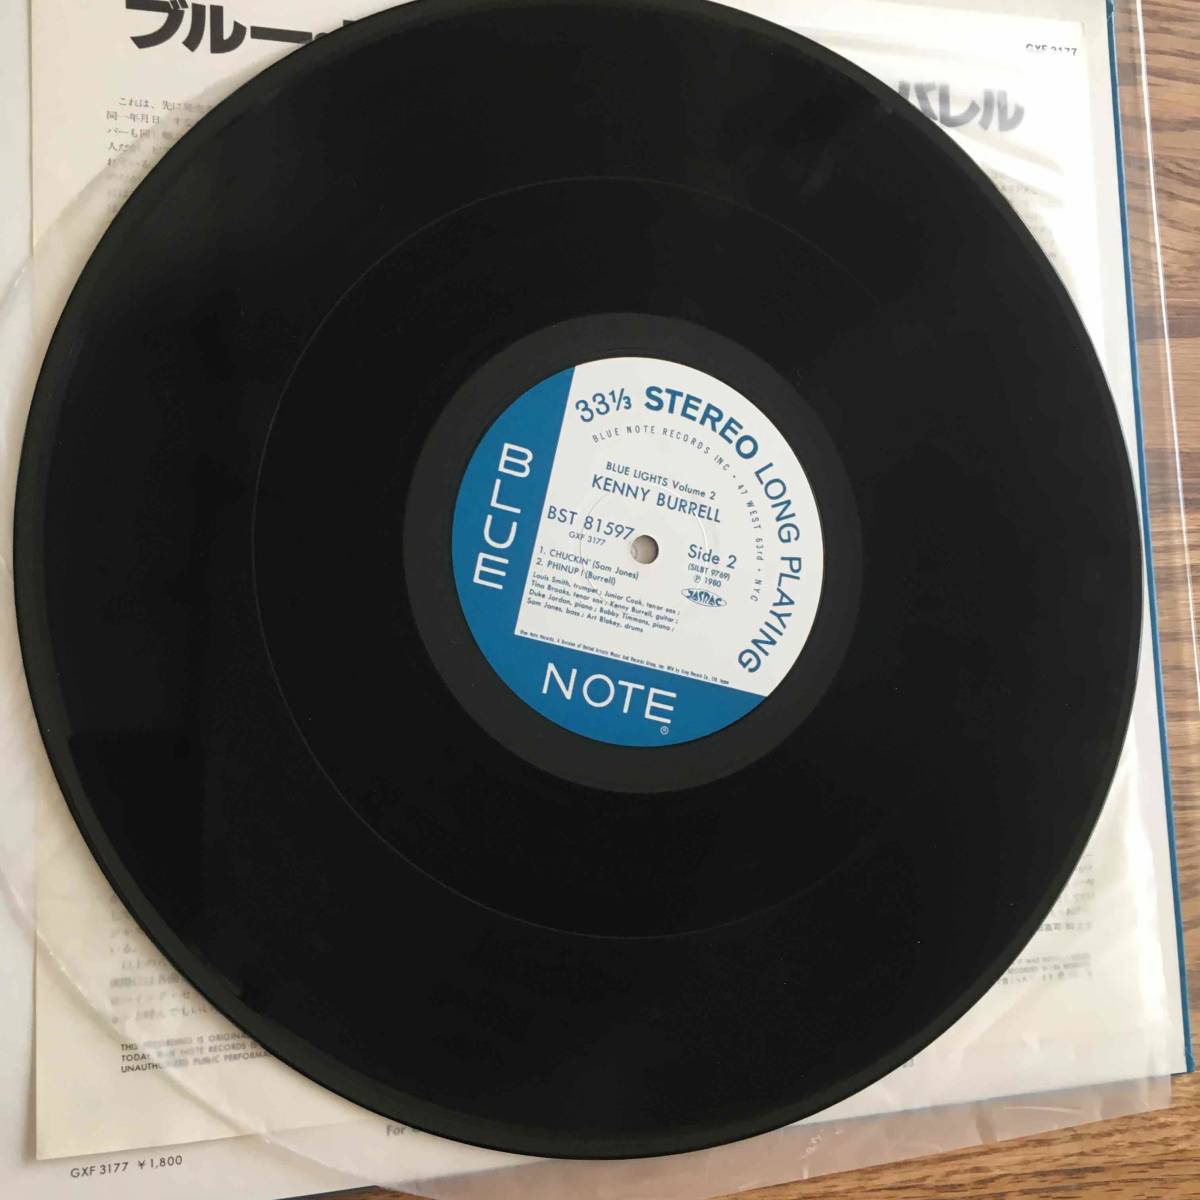 【japan】Kenny Burrell/ Blue Lights, Vol. 2/Blue Note/ BST 81597/バレル/名盤/アンディ_画像6